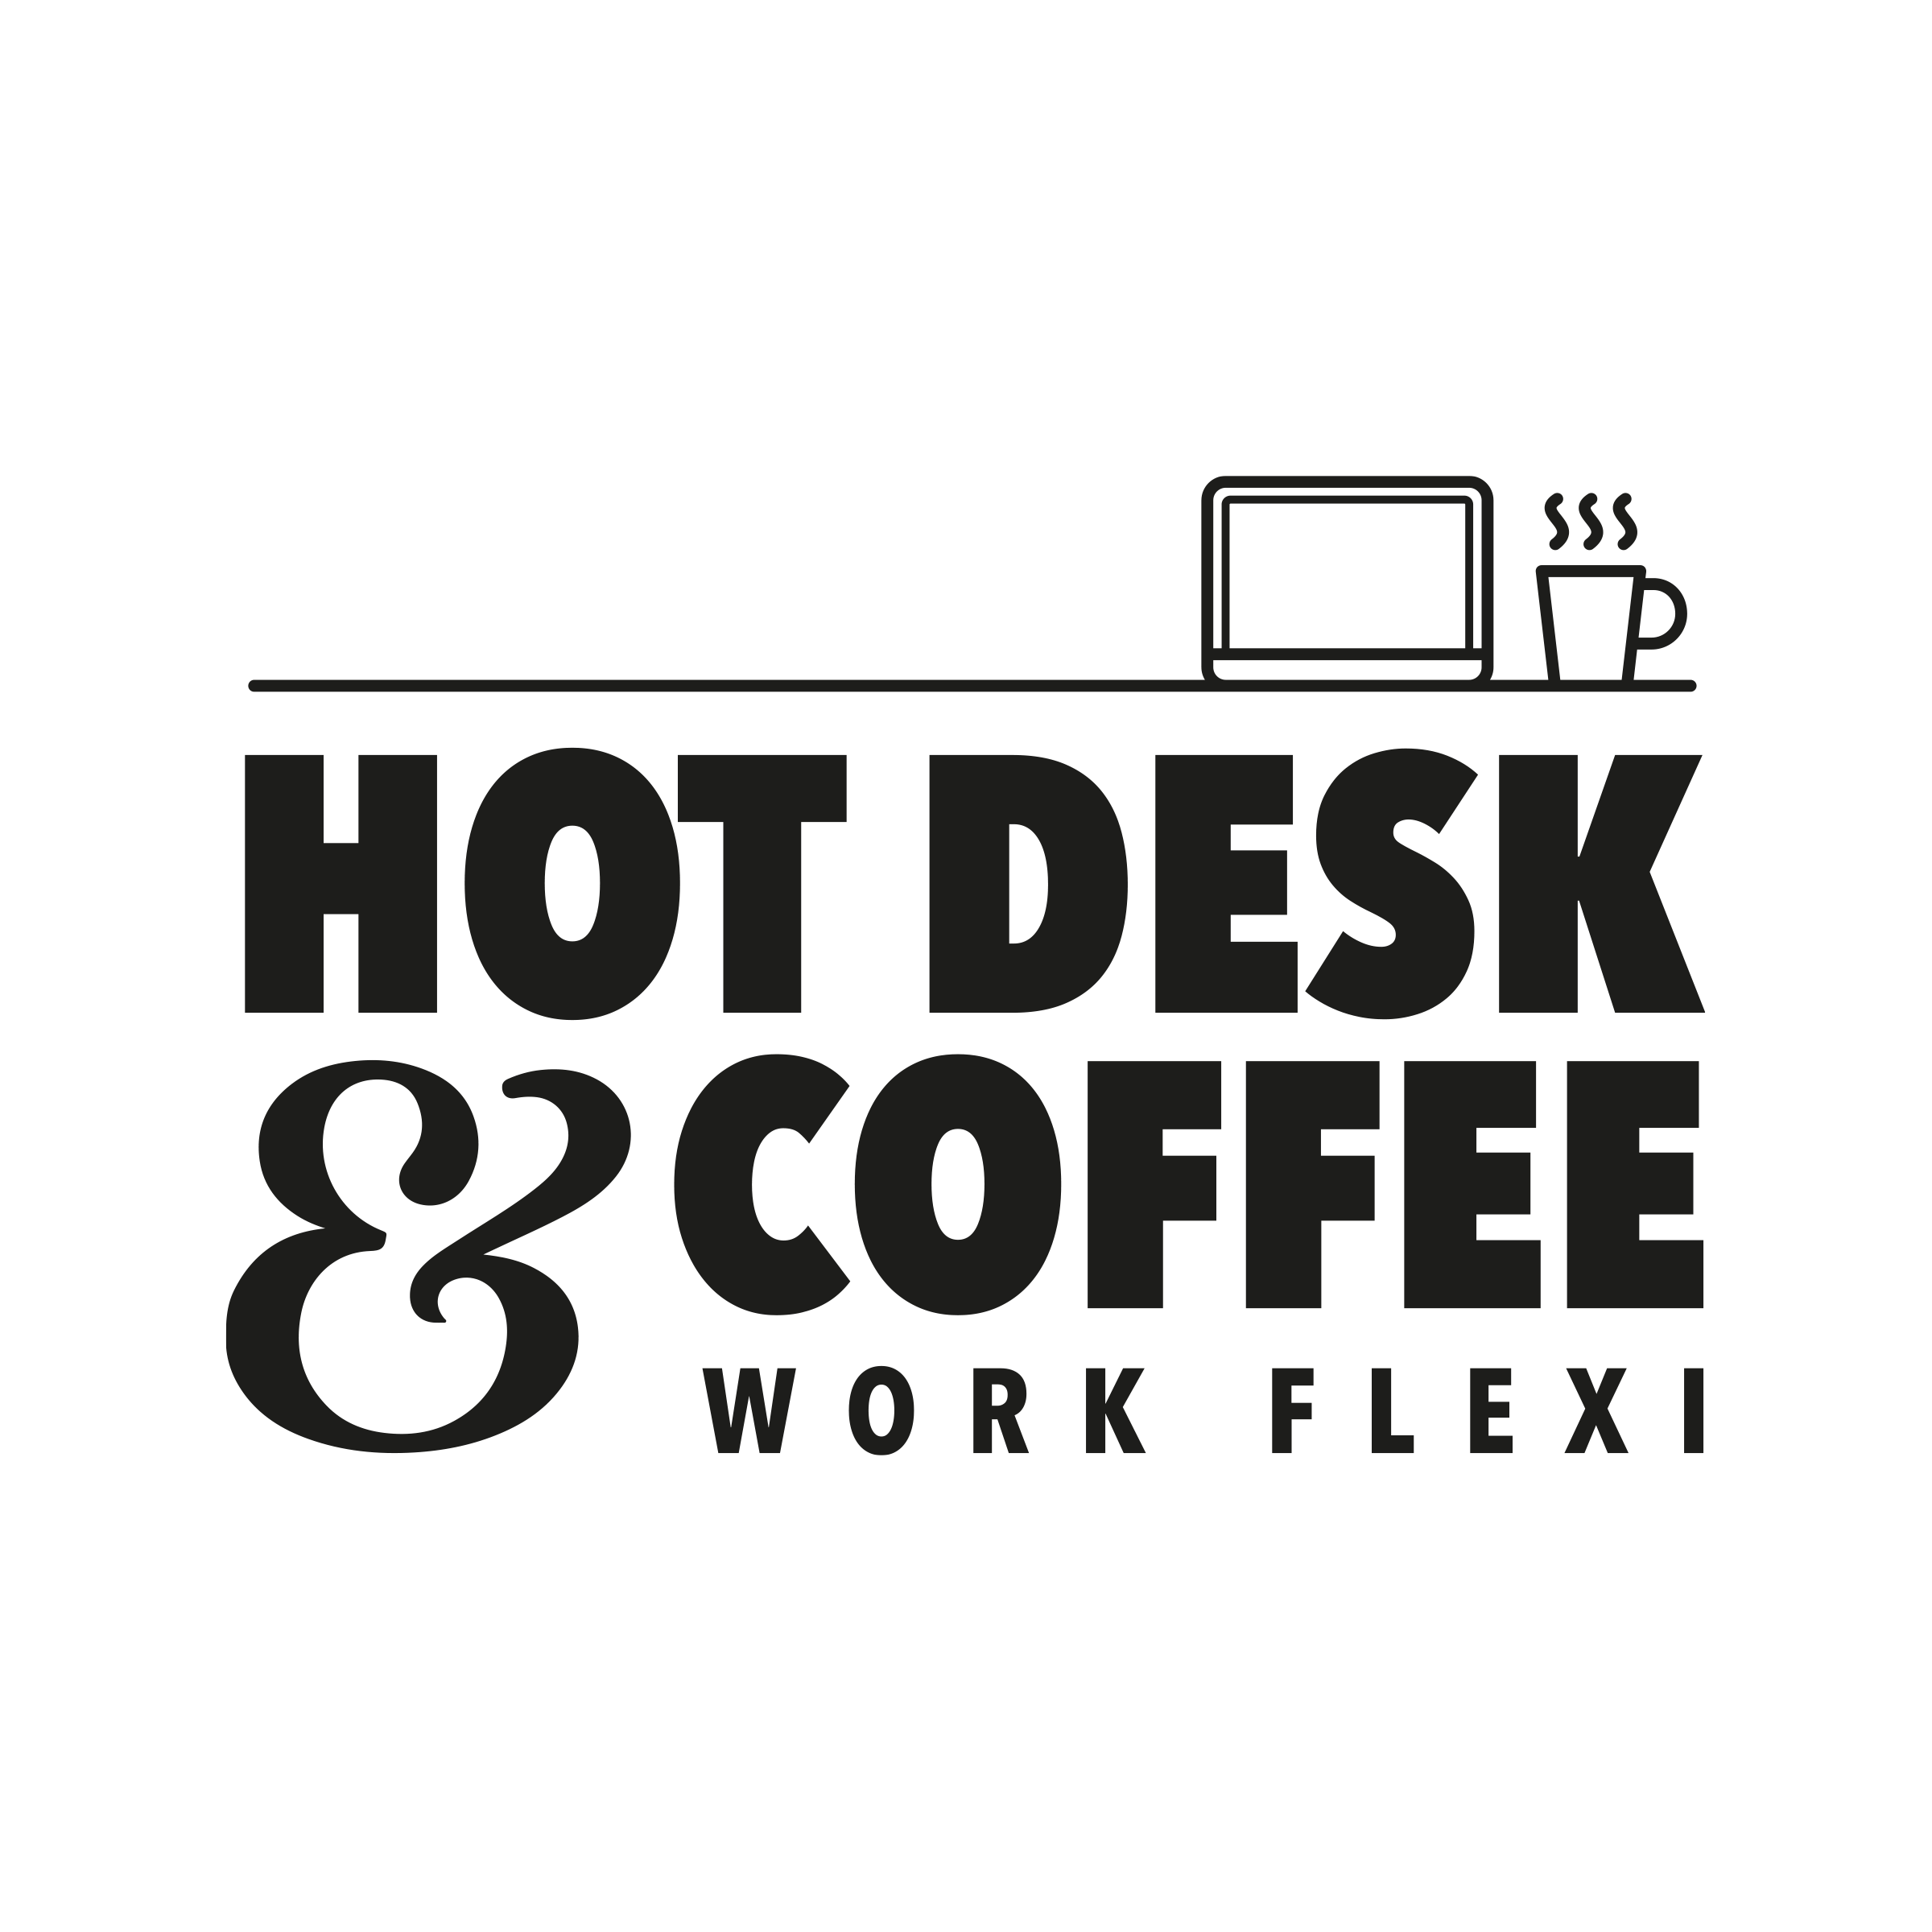 Hot desk and coffee logo design